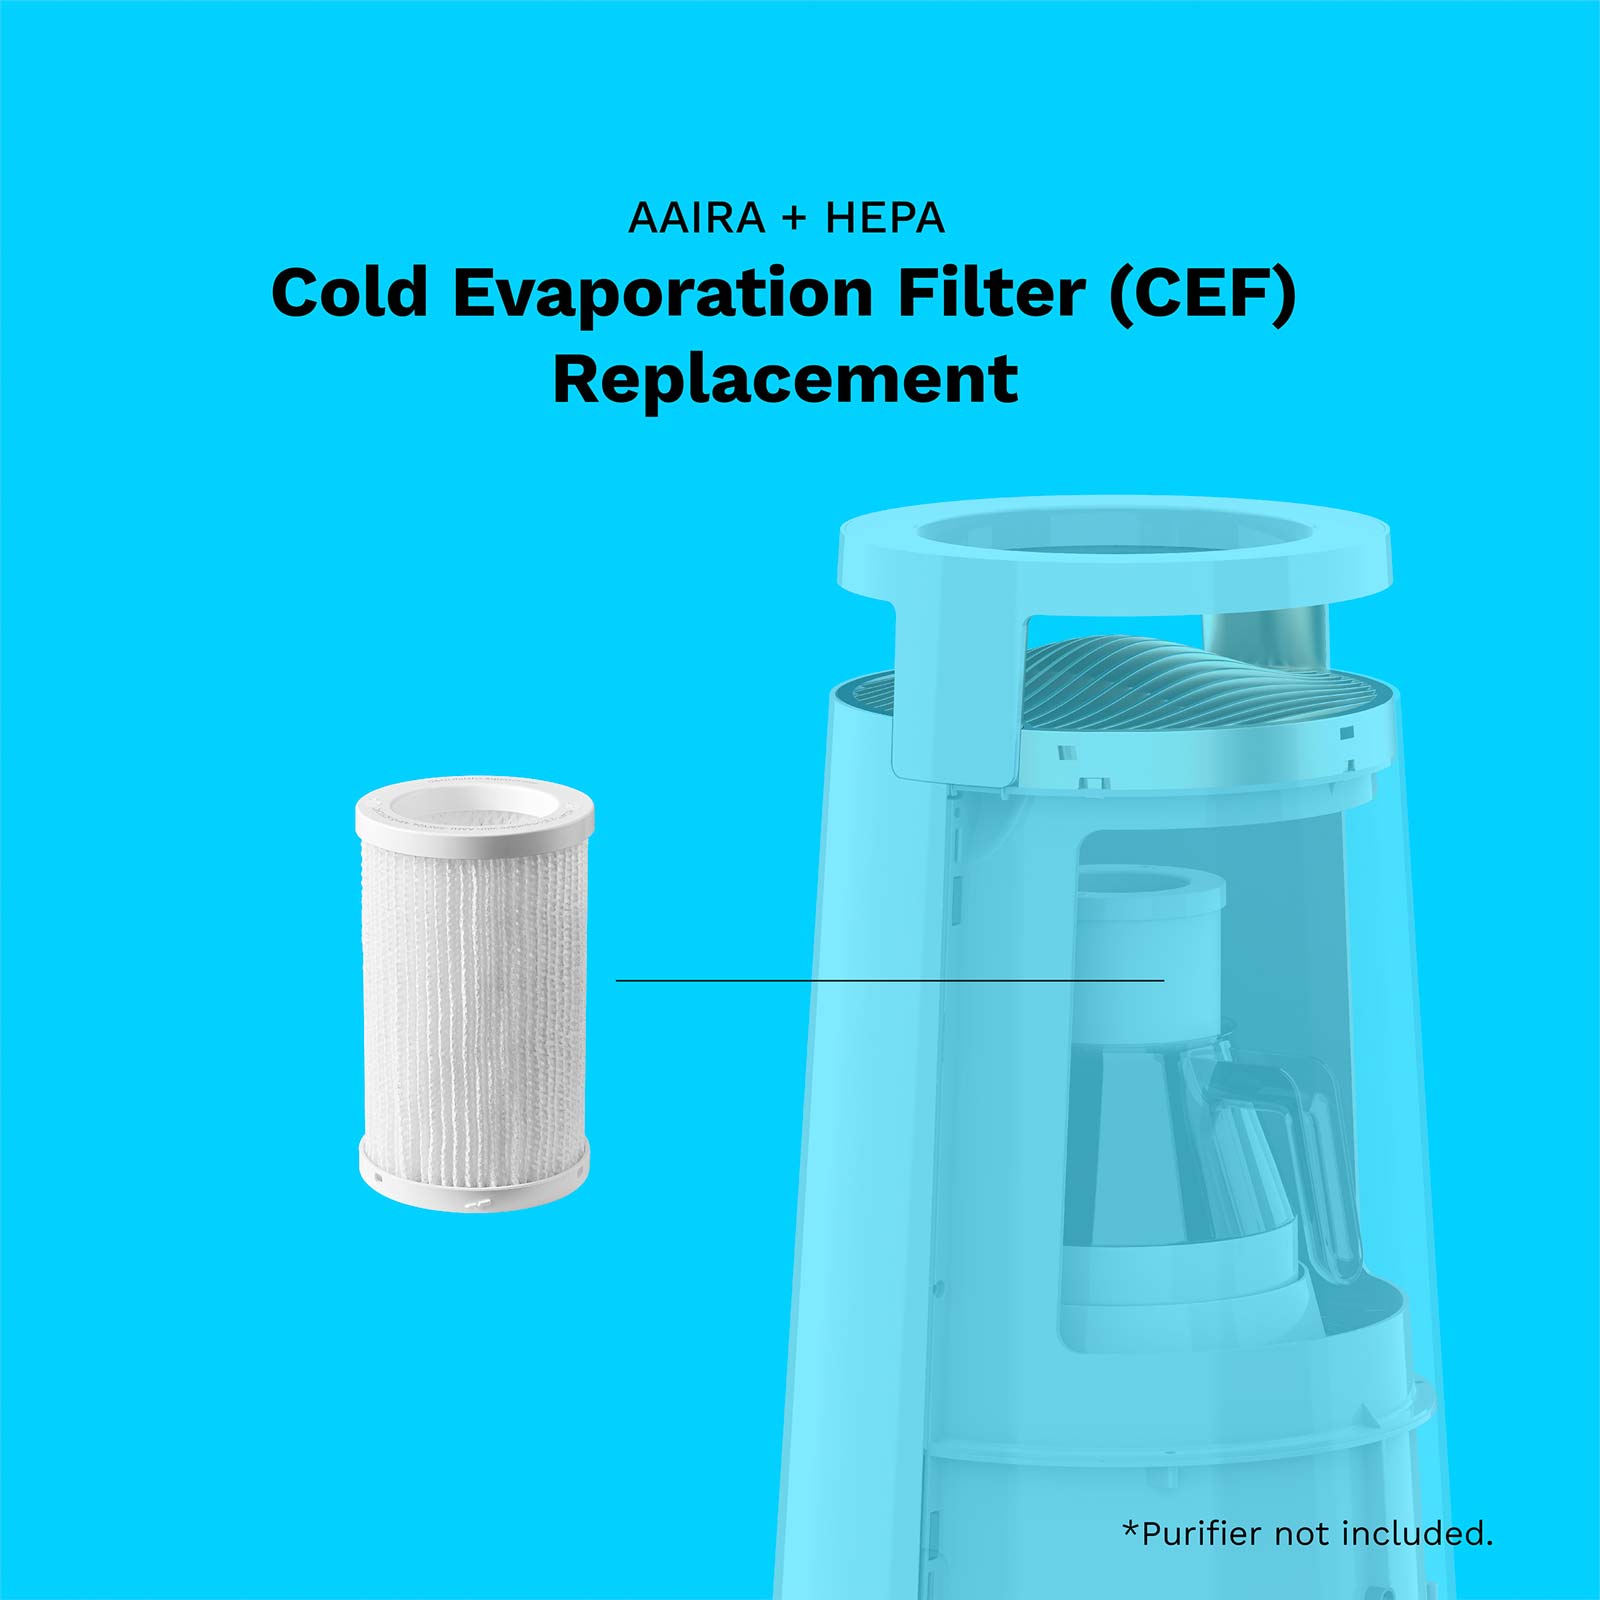 Aaira + HEPA / Cold Evaporation Filter (CEF)